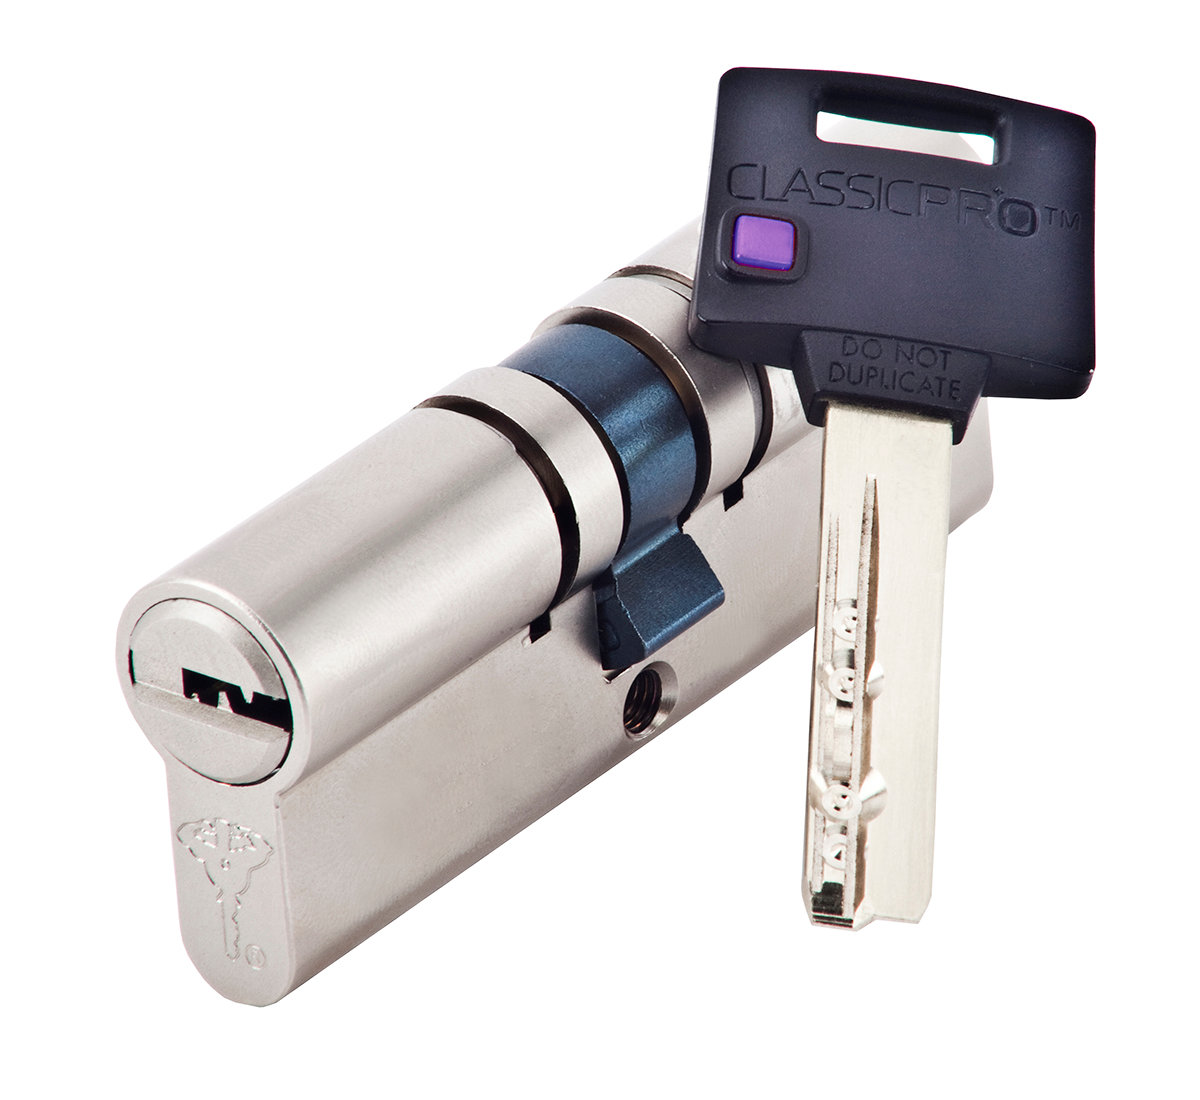 Цилиндр Mul-t-Lock Classic Pro ключ-ключ (размер 31x50 мм) - Никель, Шестеренка (3 ключа)